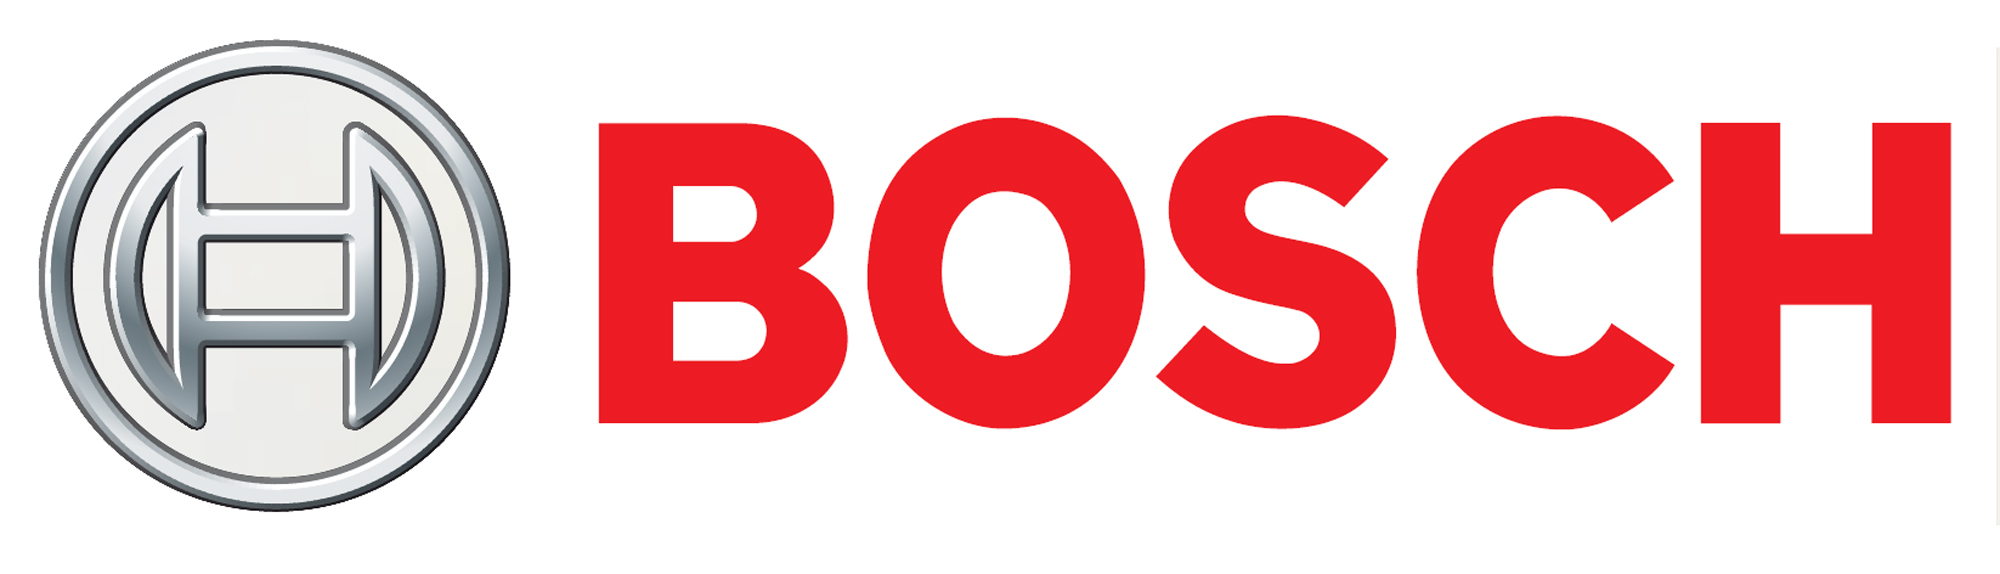 Bosch logo Wallpaper